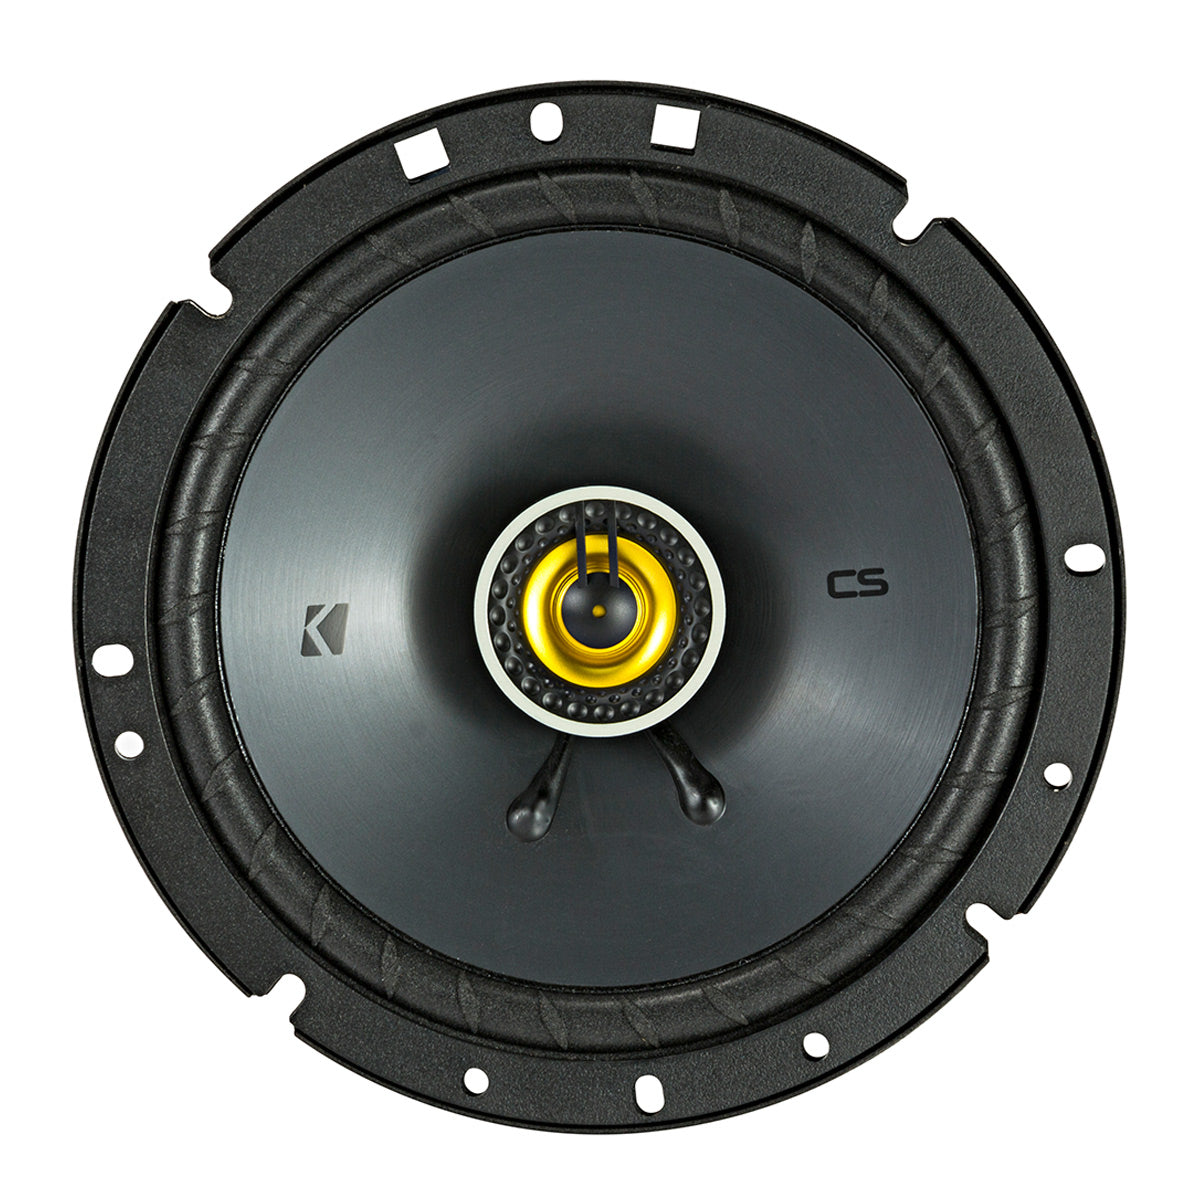 Kicker 46CSC674 CS-Series 6-3/4" 2-Way Coaxial Speakers